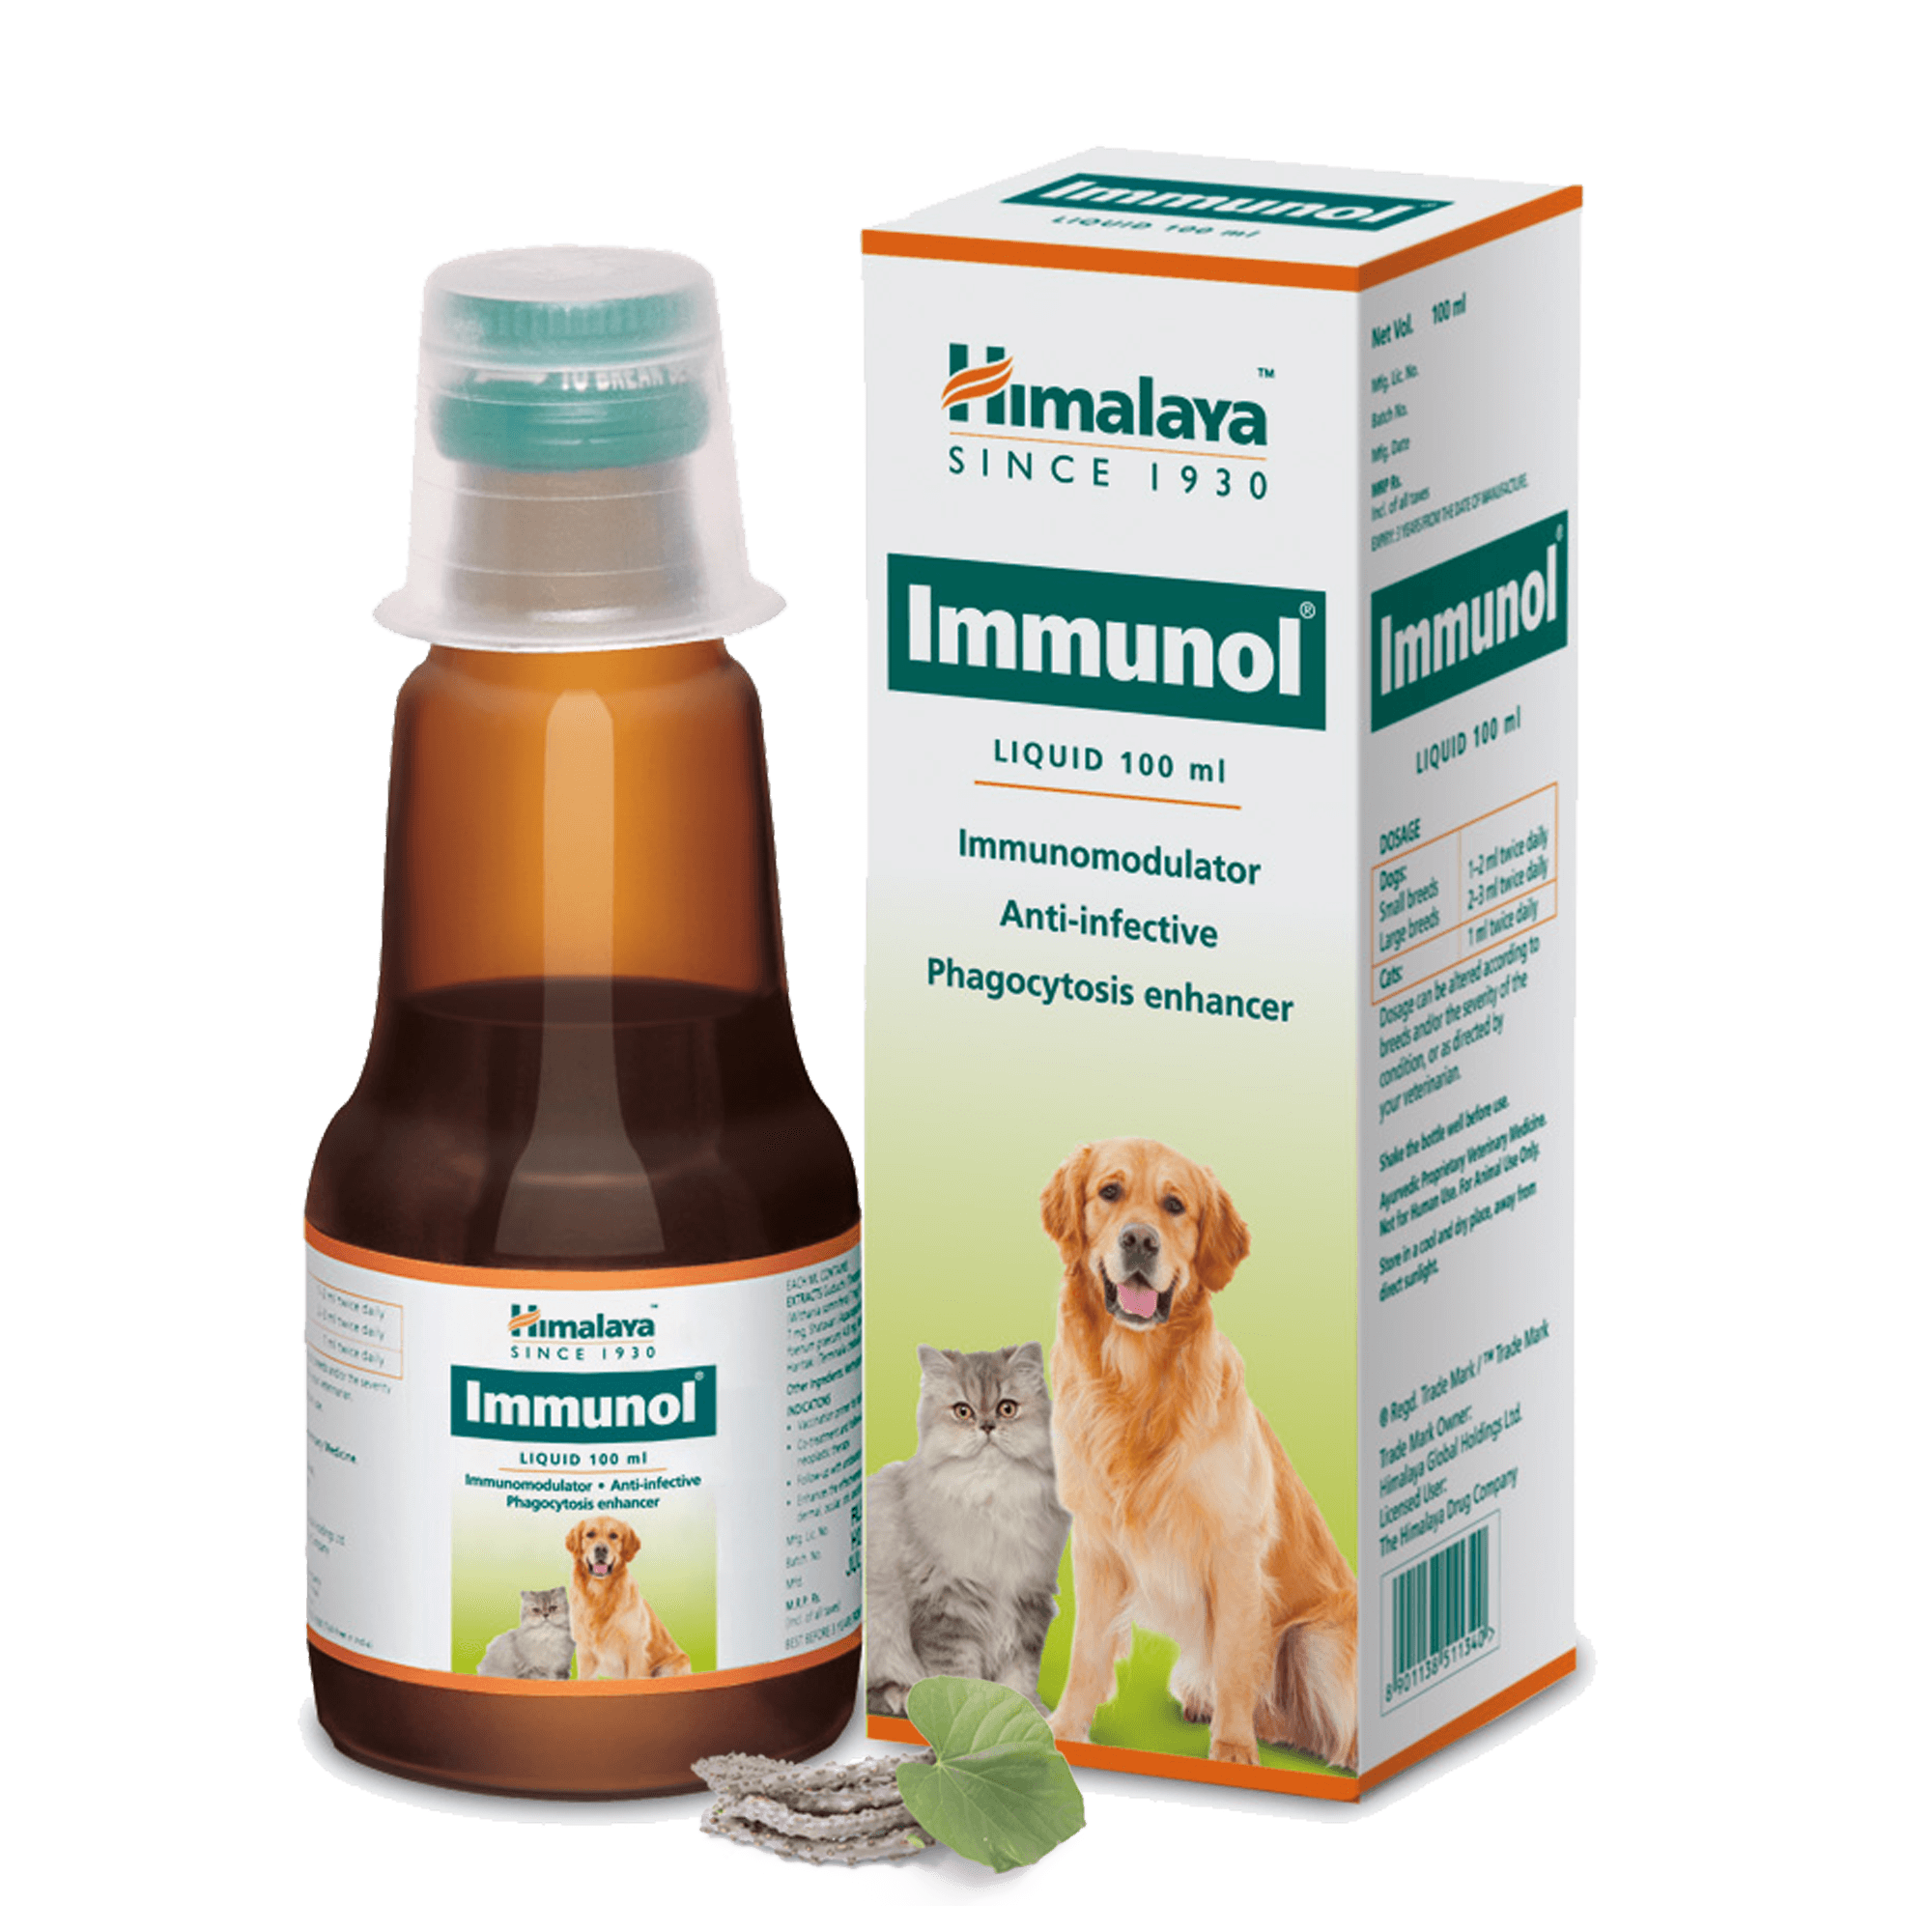 Himalaya Immunol - Immunomodulator and Phagocytosis Enhancer